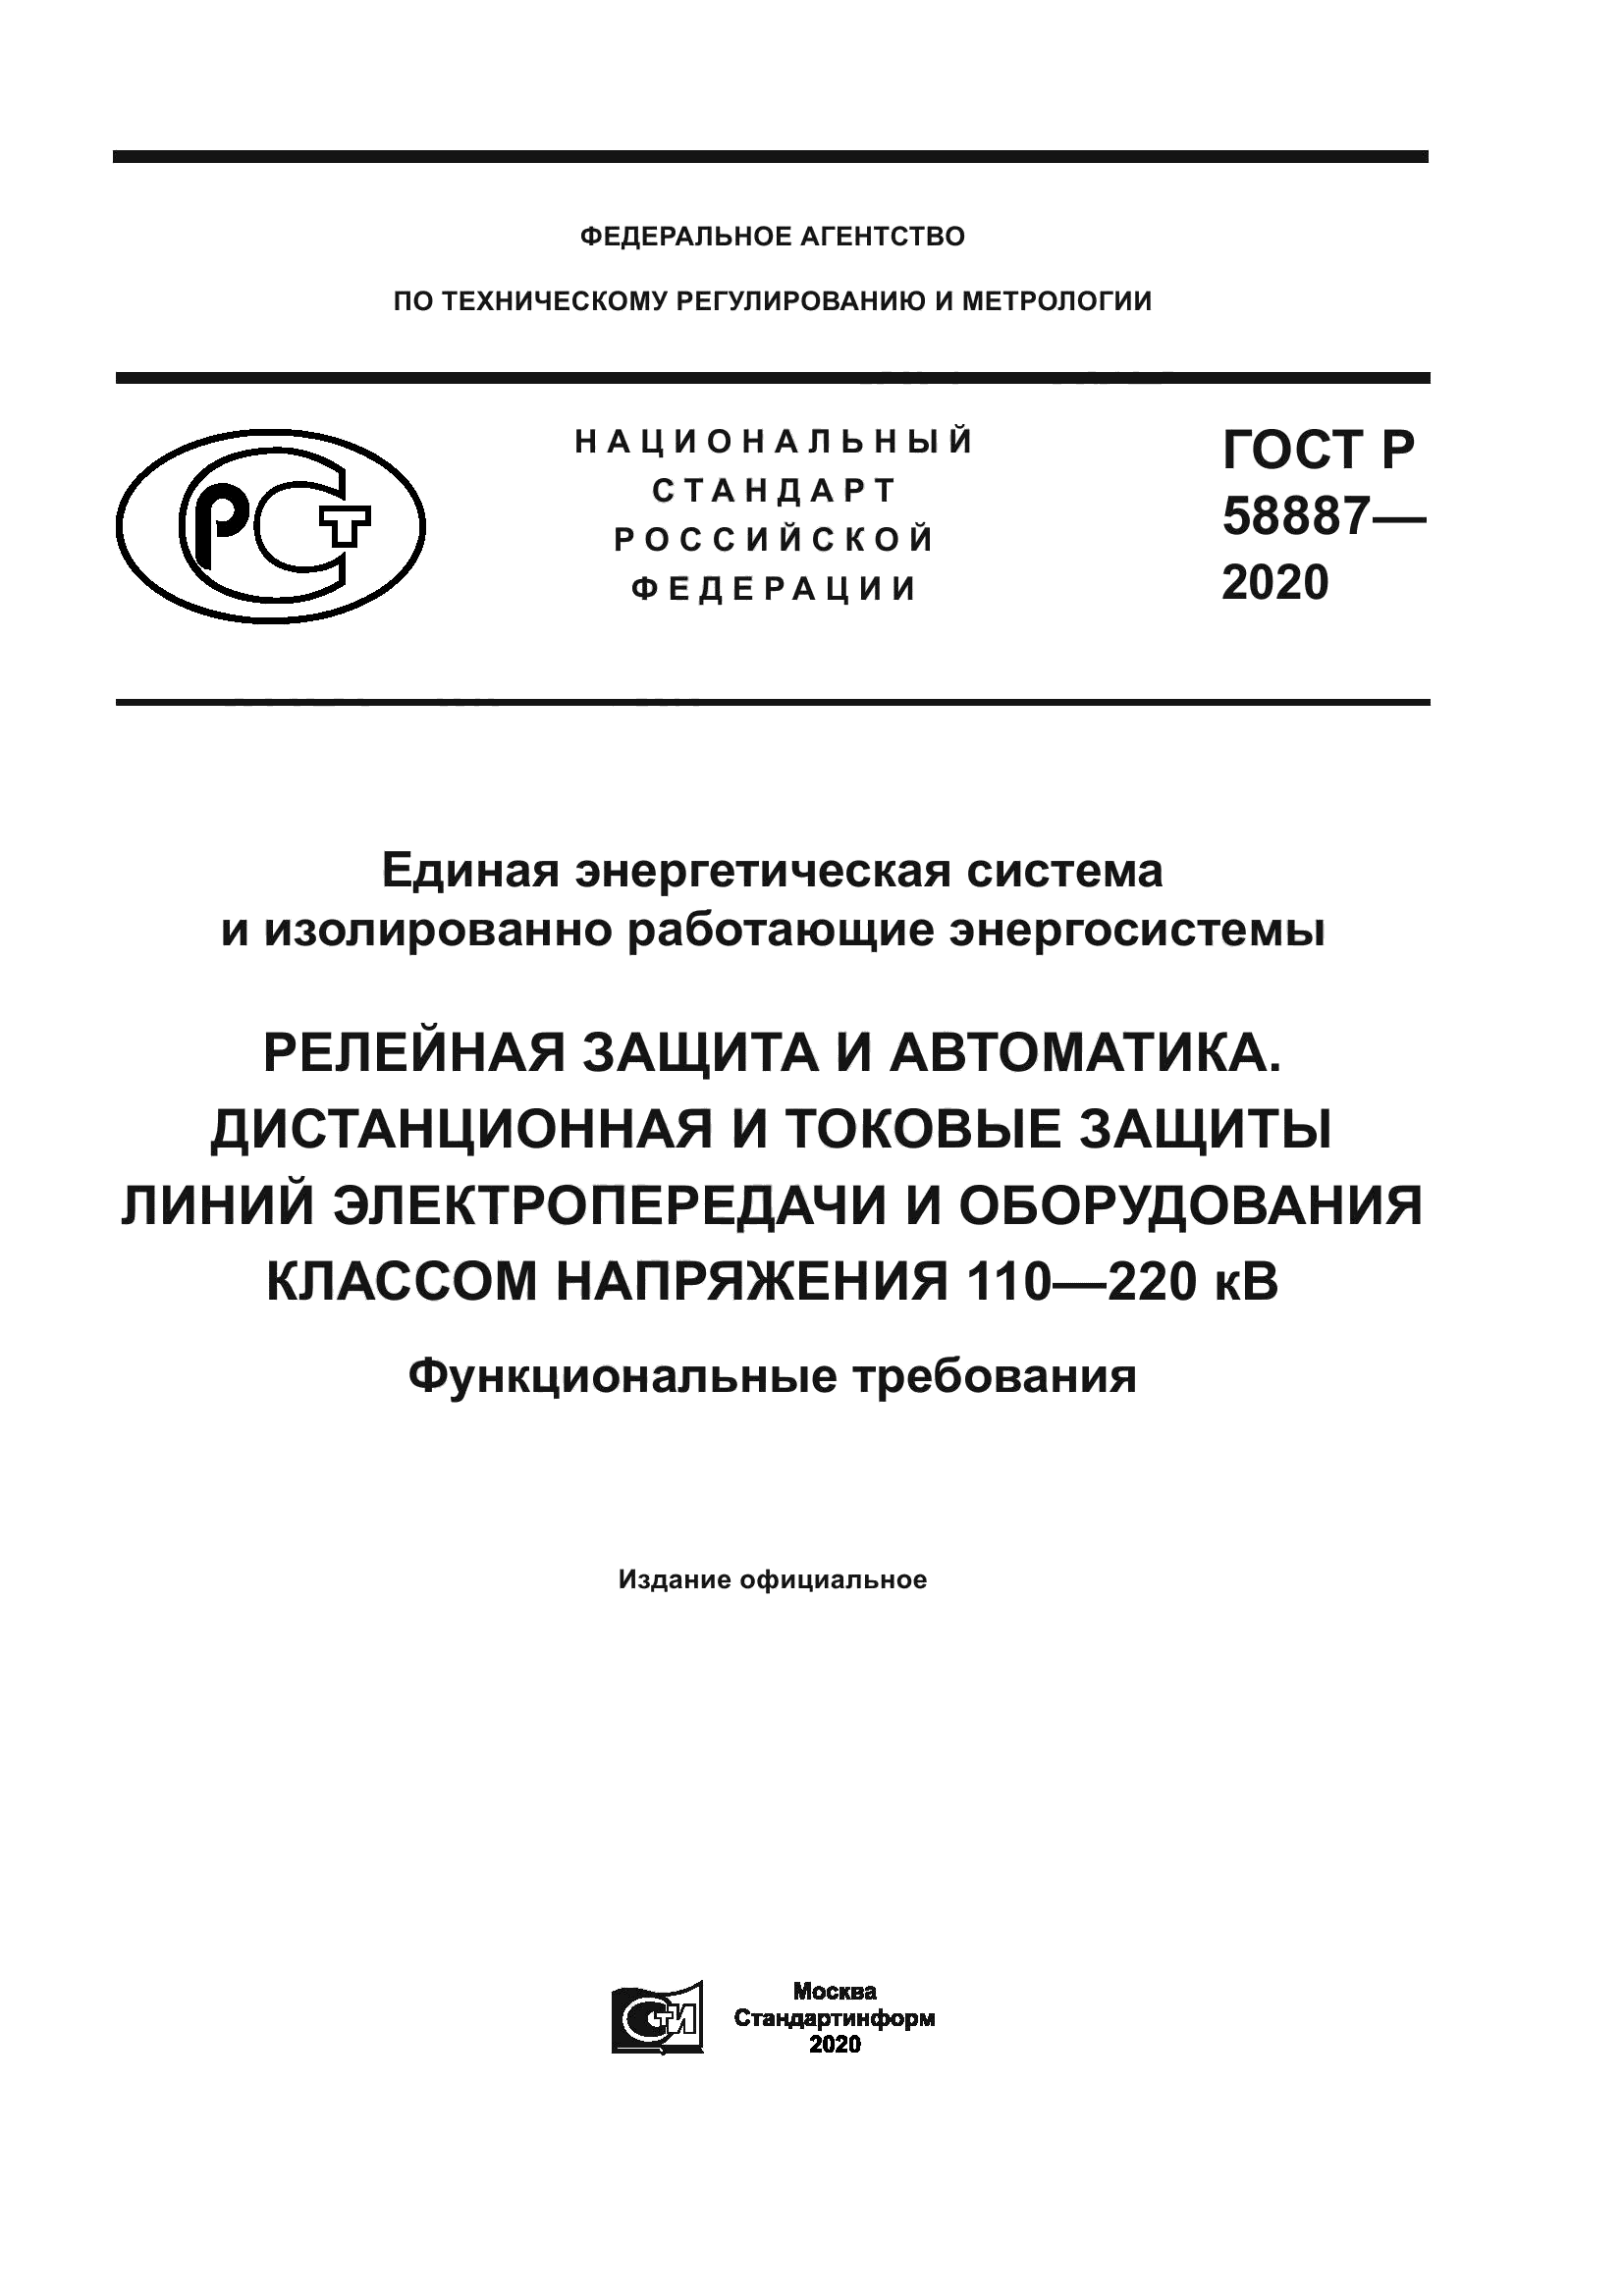 ГОСТ Р 58887-2020